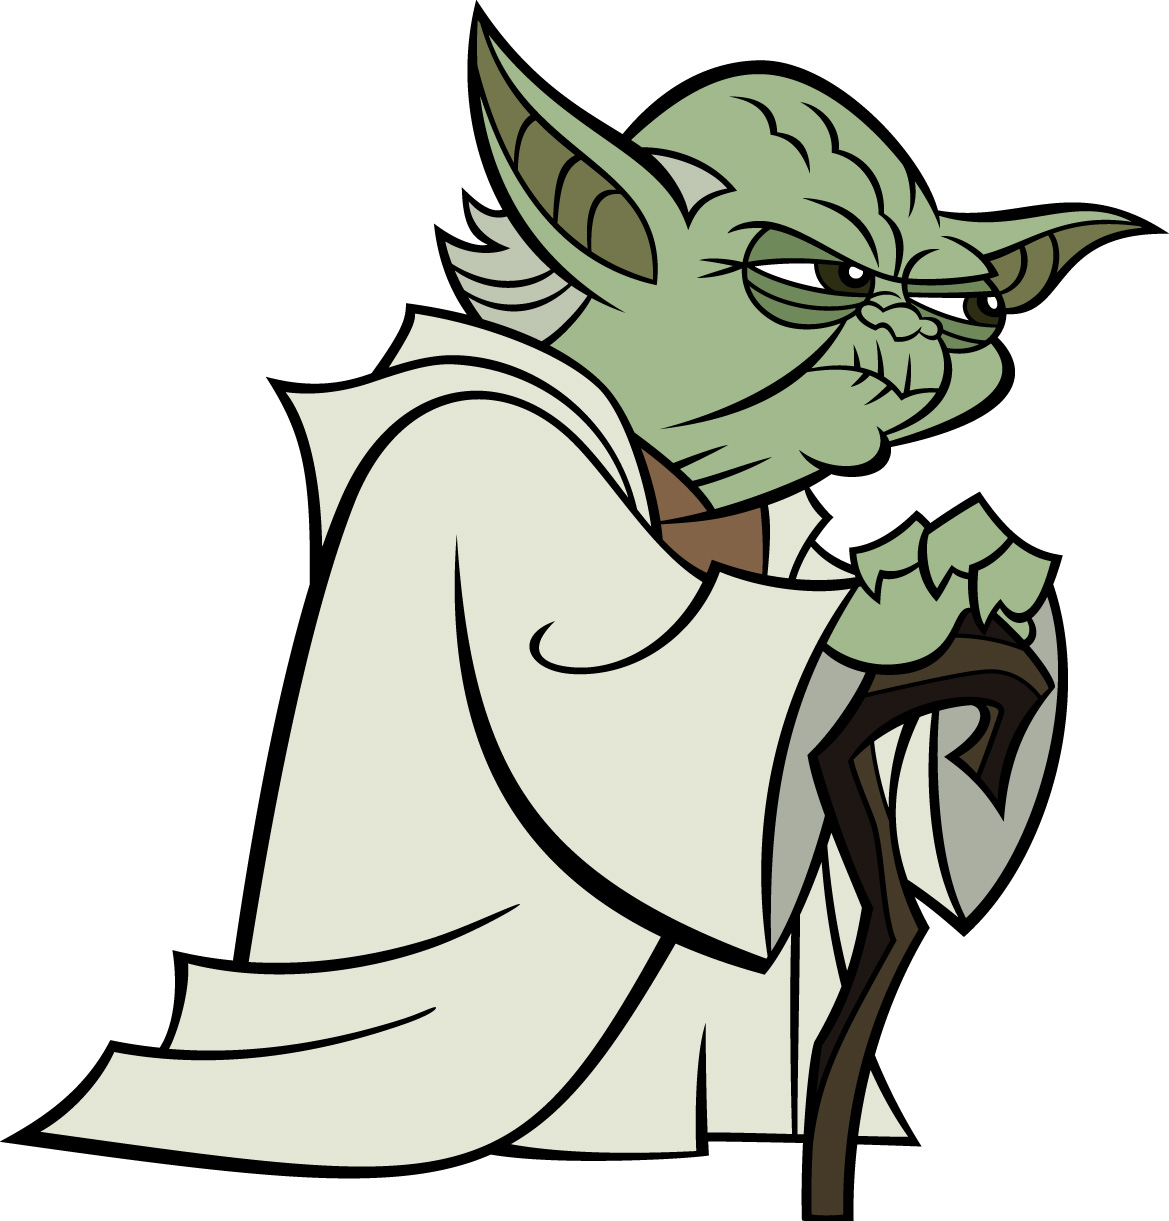 Star Wars Yoda Cartoon drawing free image download